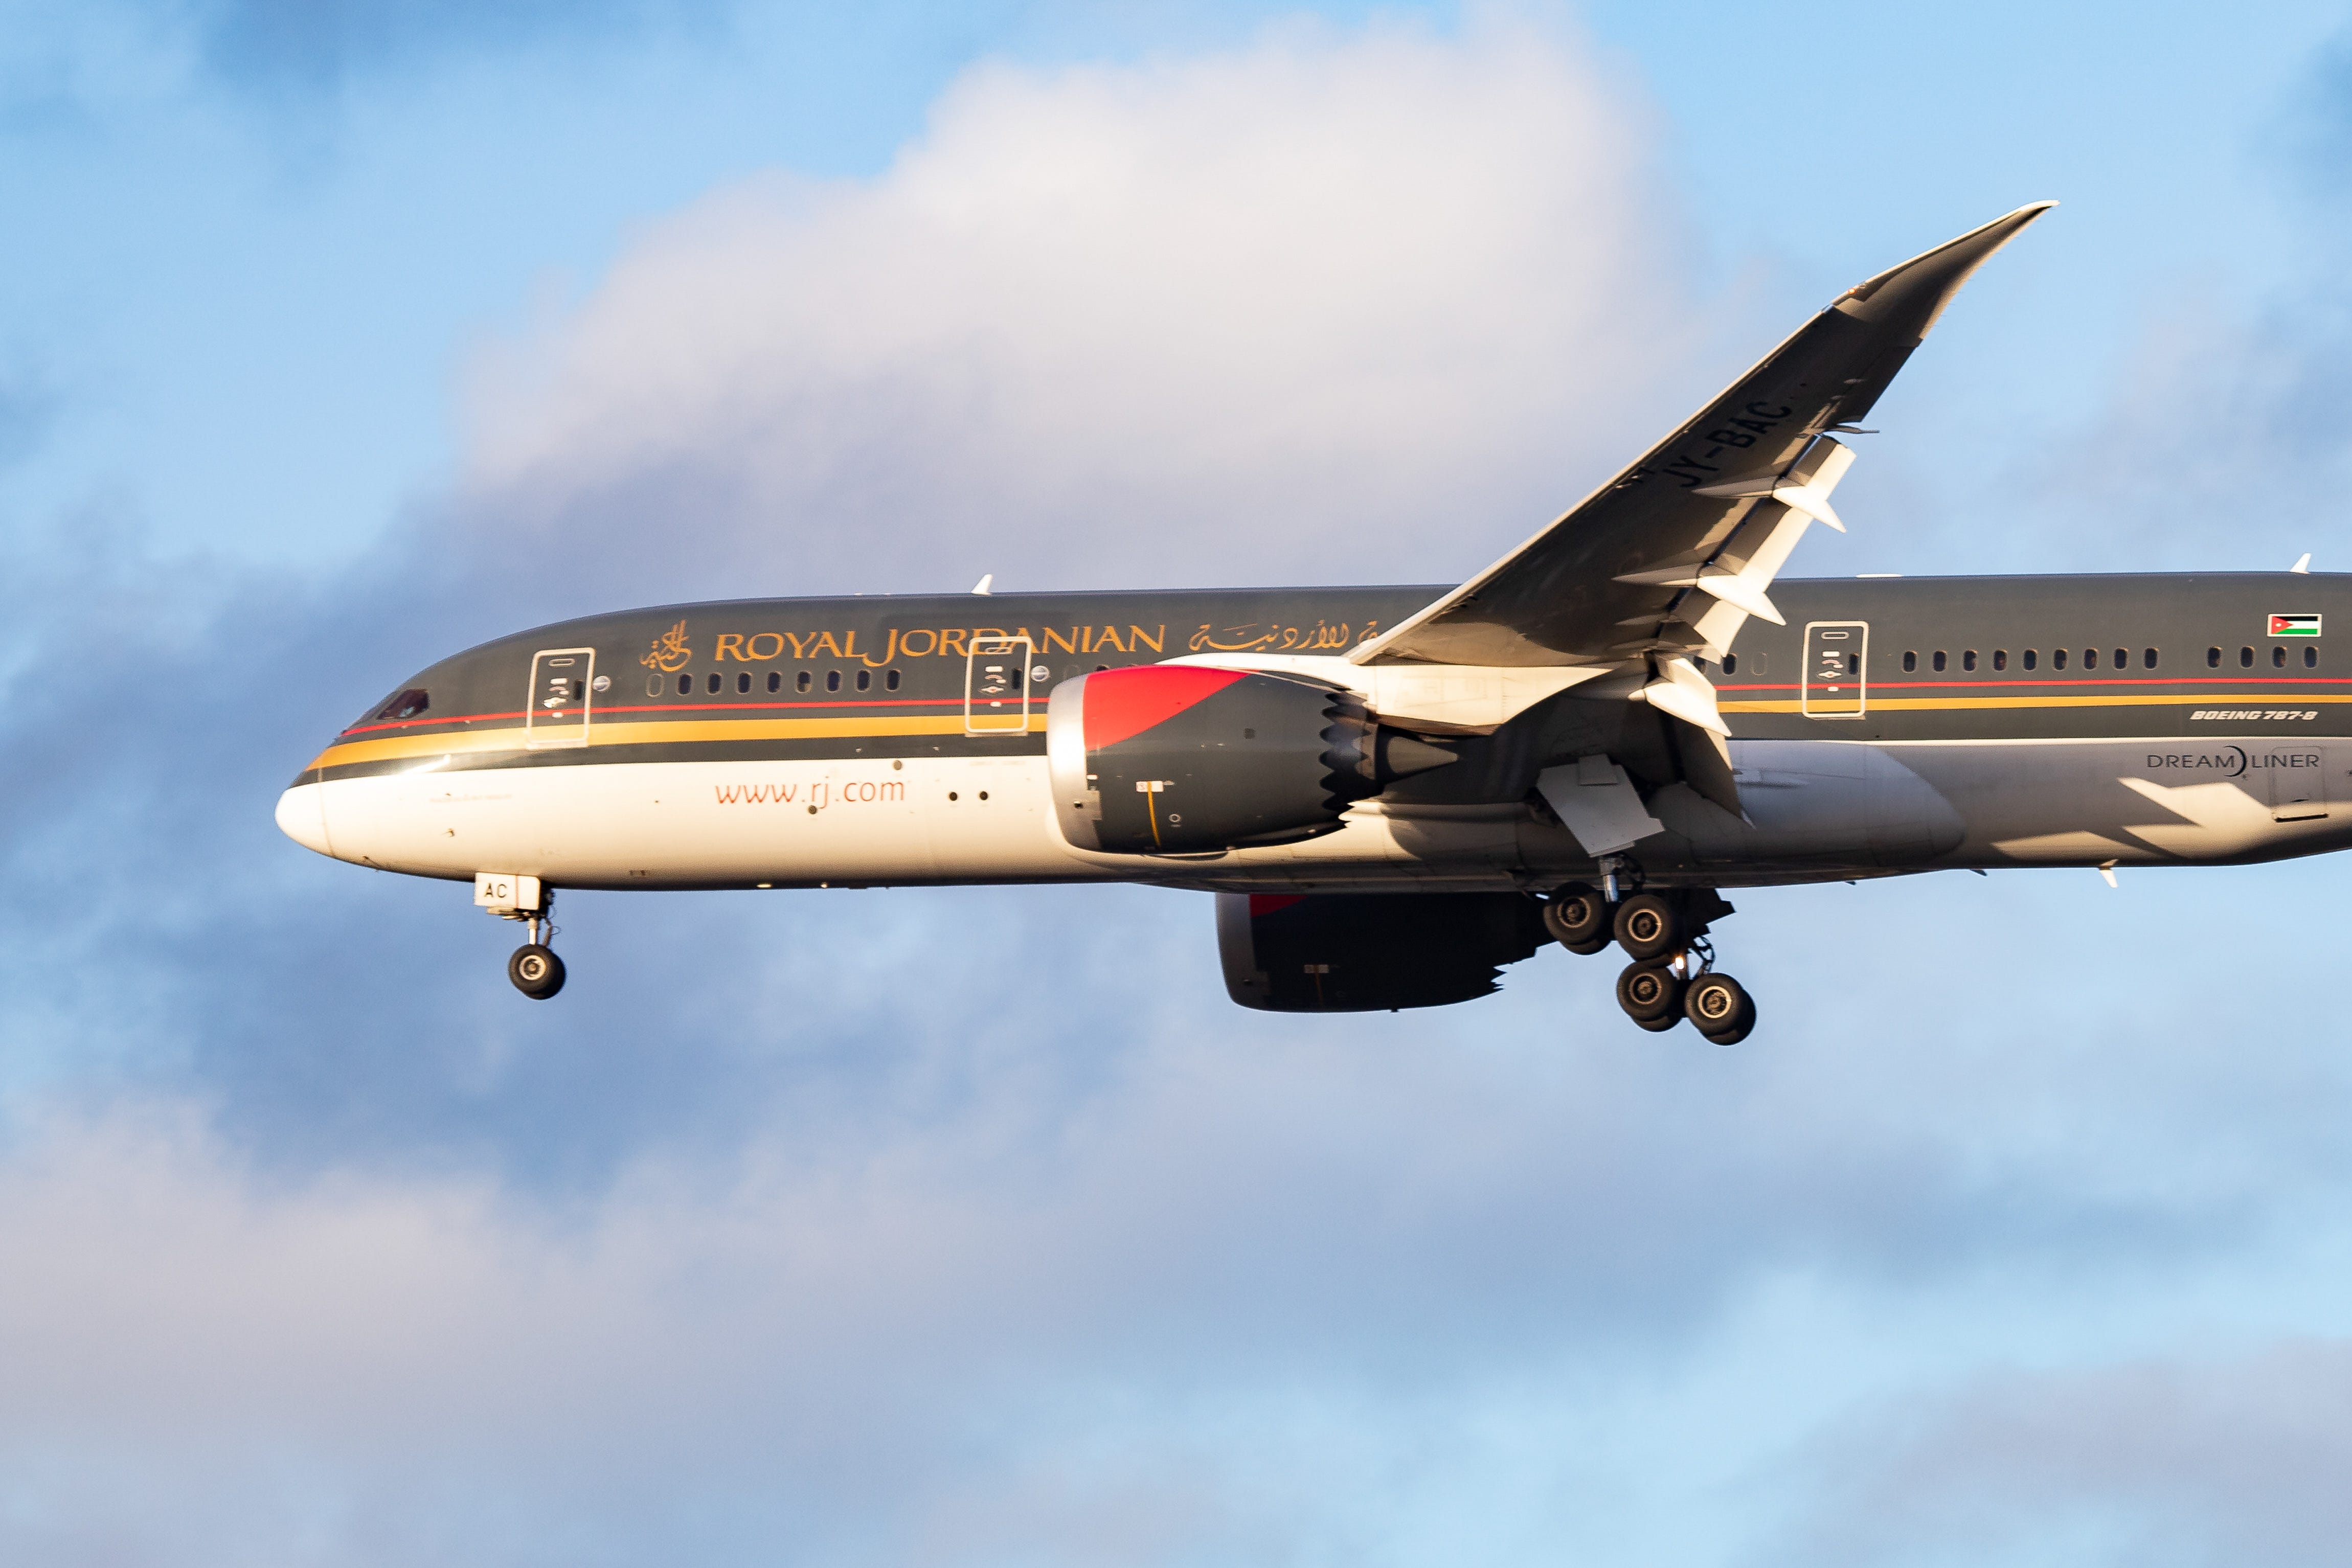 Royal Jordanian Airlines Boeing 787 in komplett schwarzer Lackierung mit goldener Beschriftung.